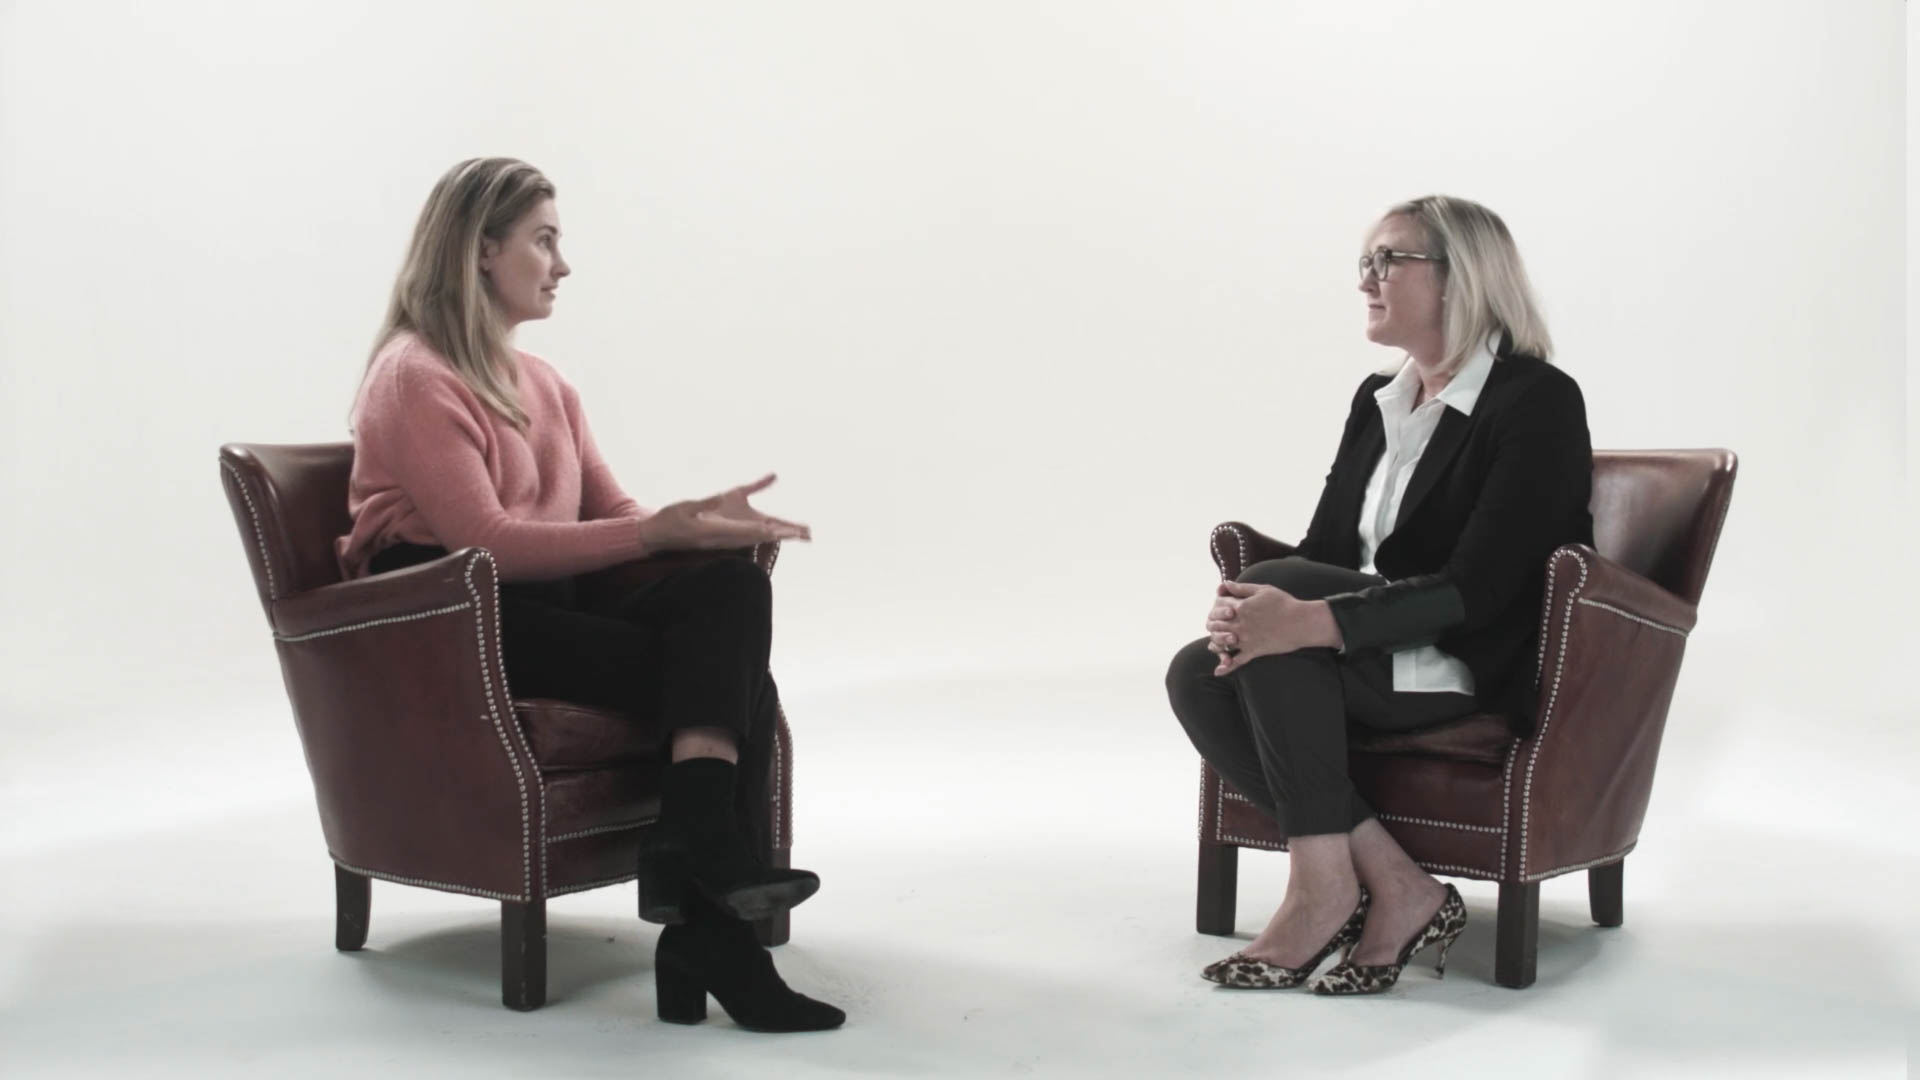 The Power of Being Purpose Driven: Lauren Bush Lauren, Founder & CEO of FEED